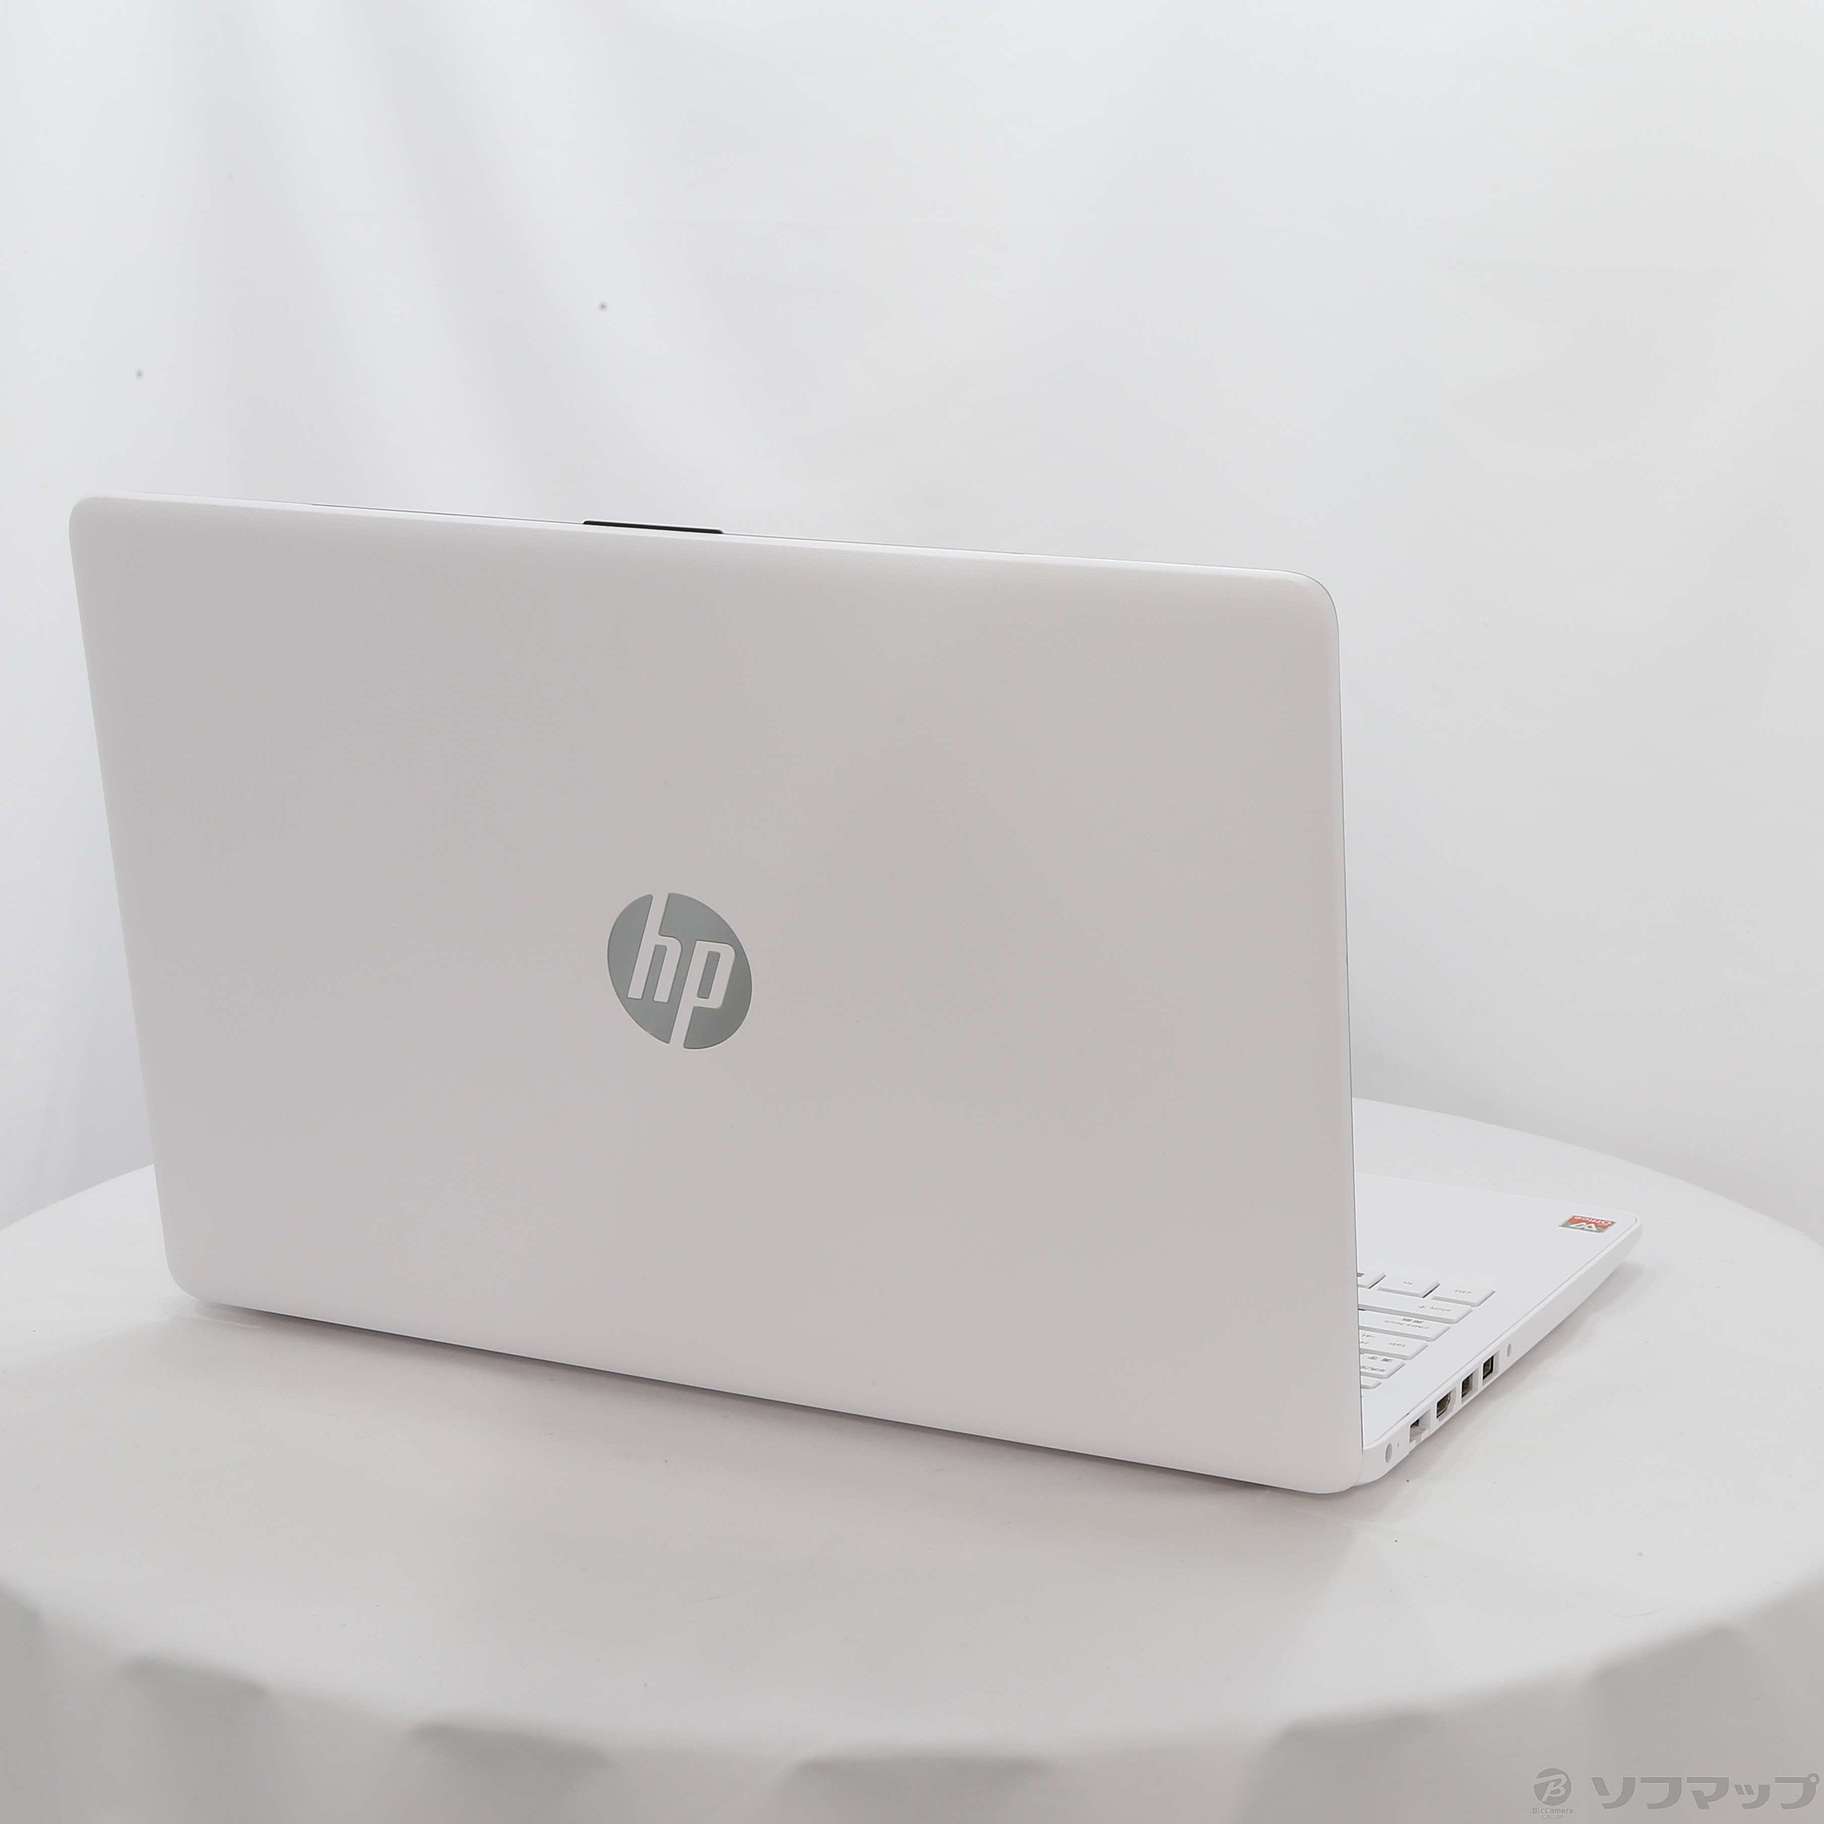 HP 15-bs007TU Windows11 ホワイト